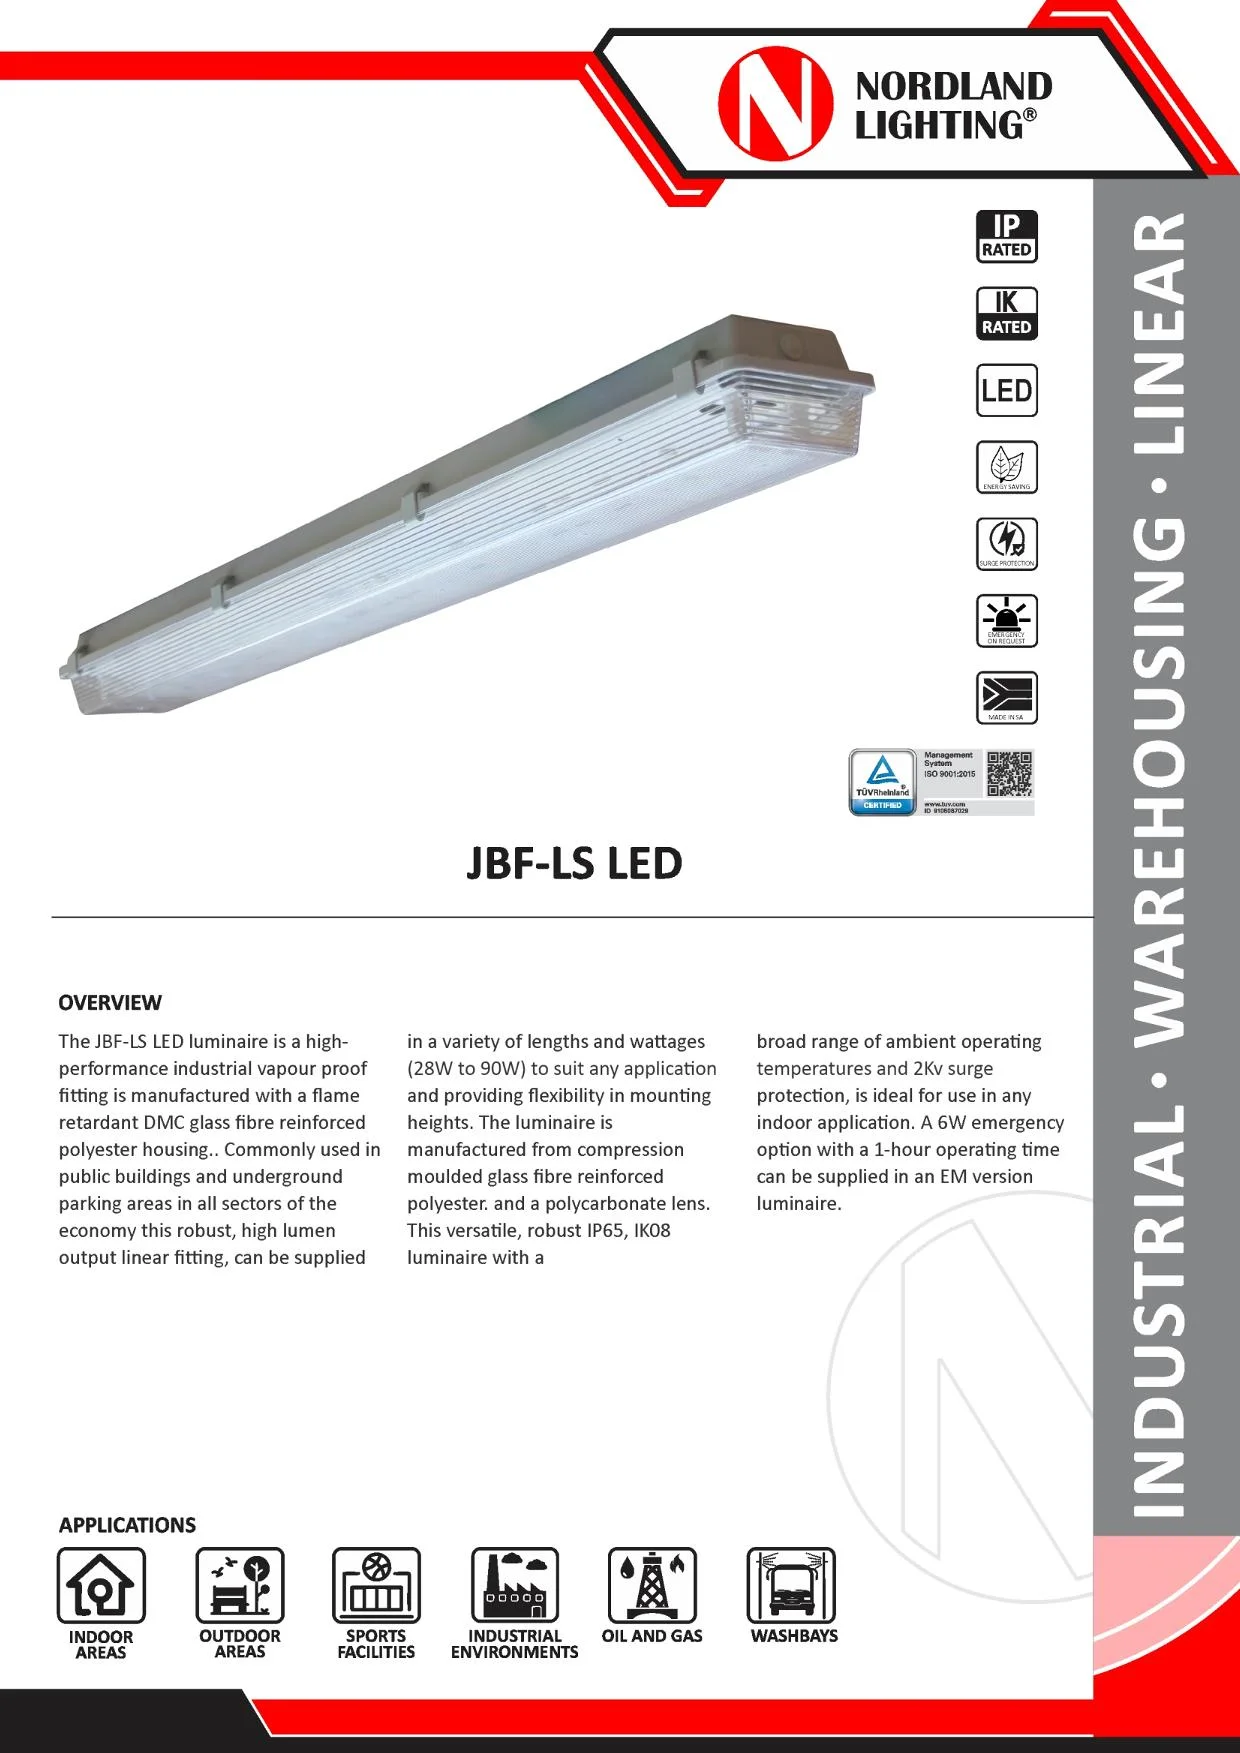 NL50 Nordland JBF-LS LED Industrial Vapour Proof Luminaire